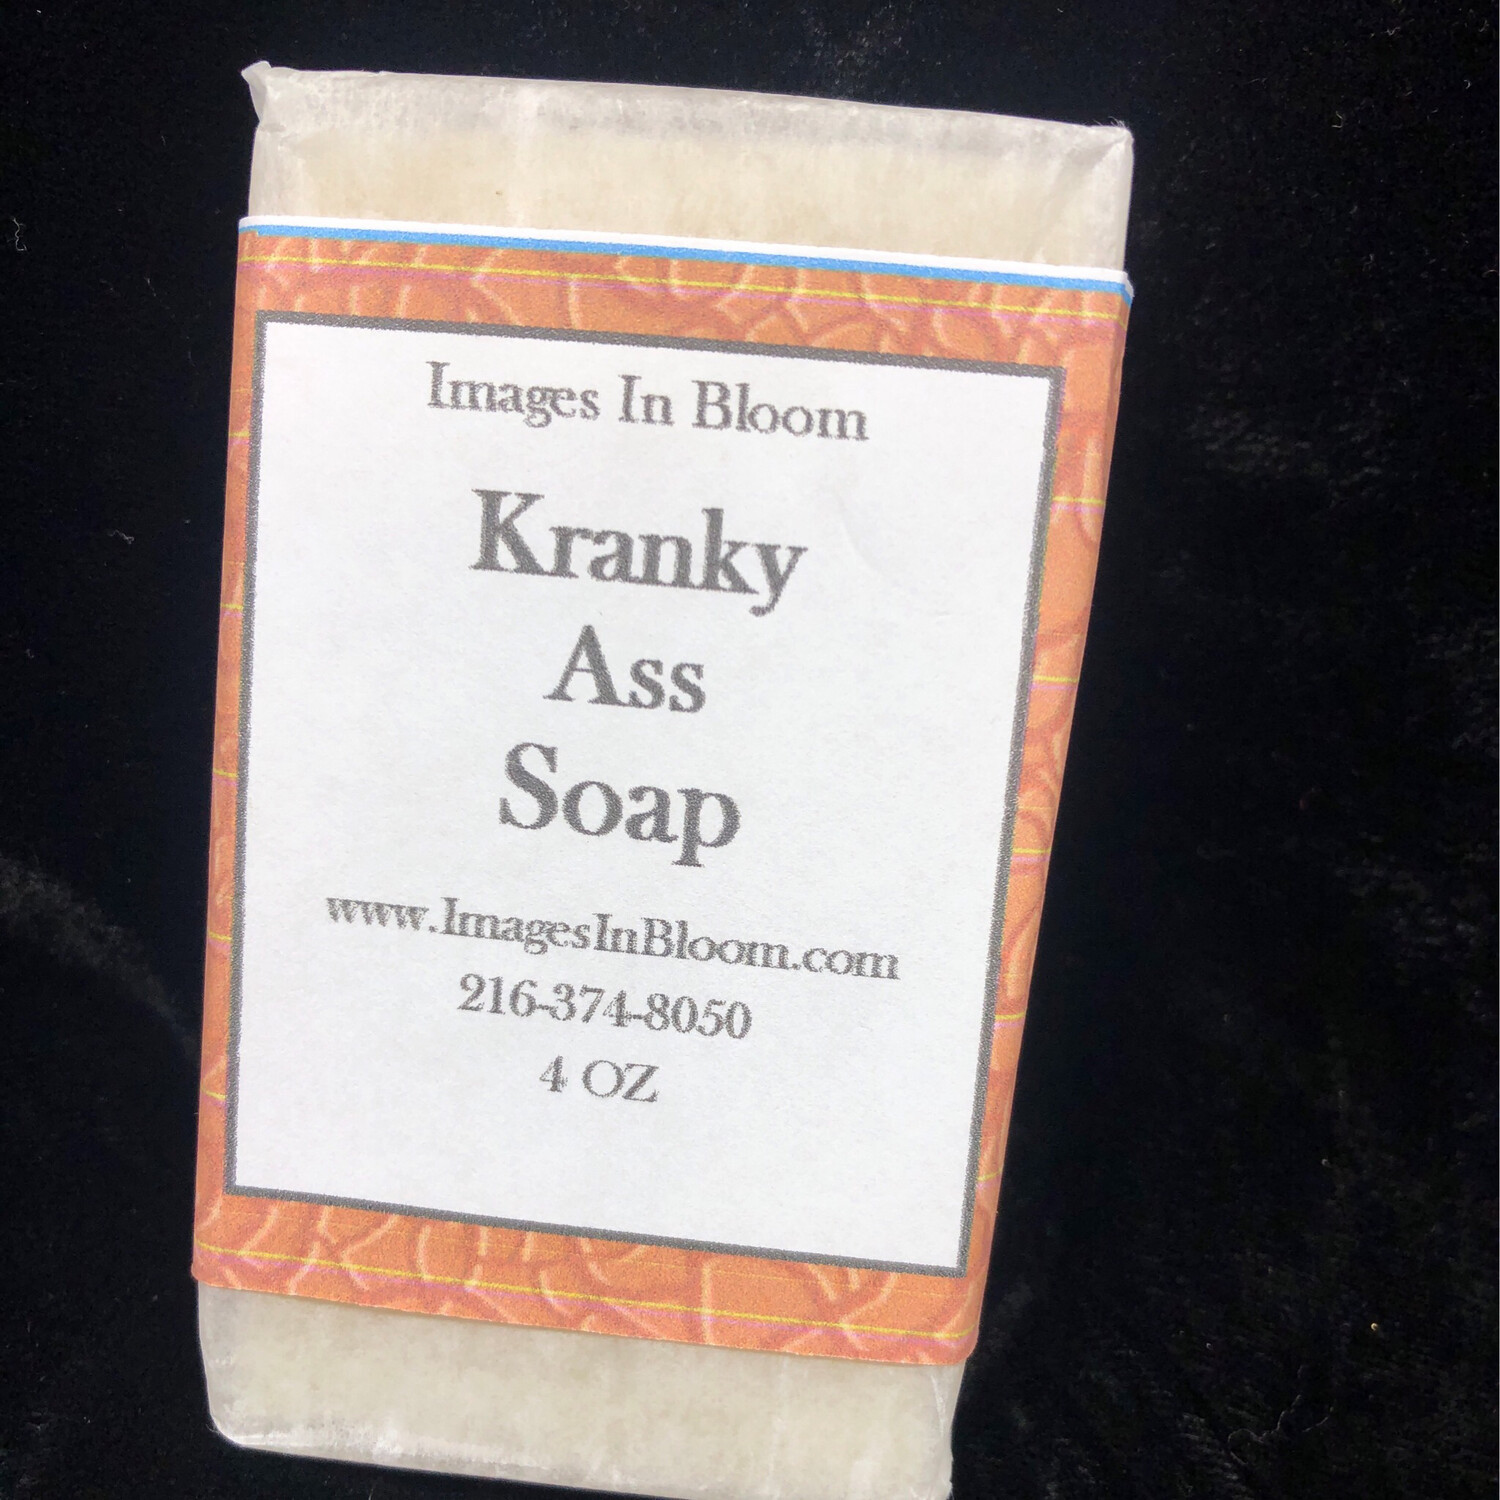 Kranky Ass Soap